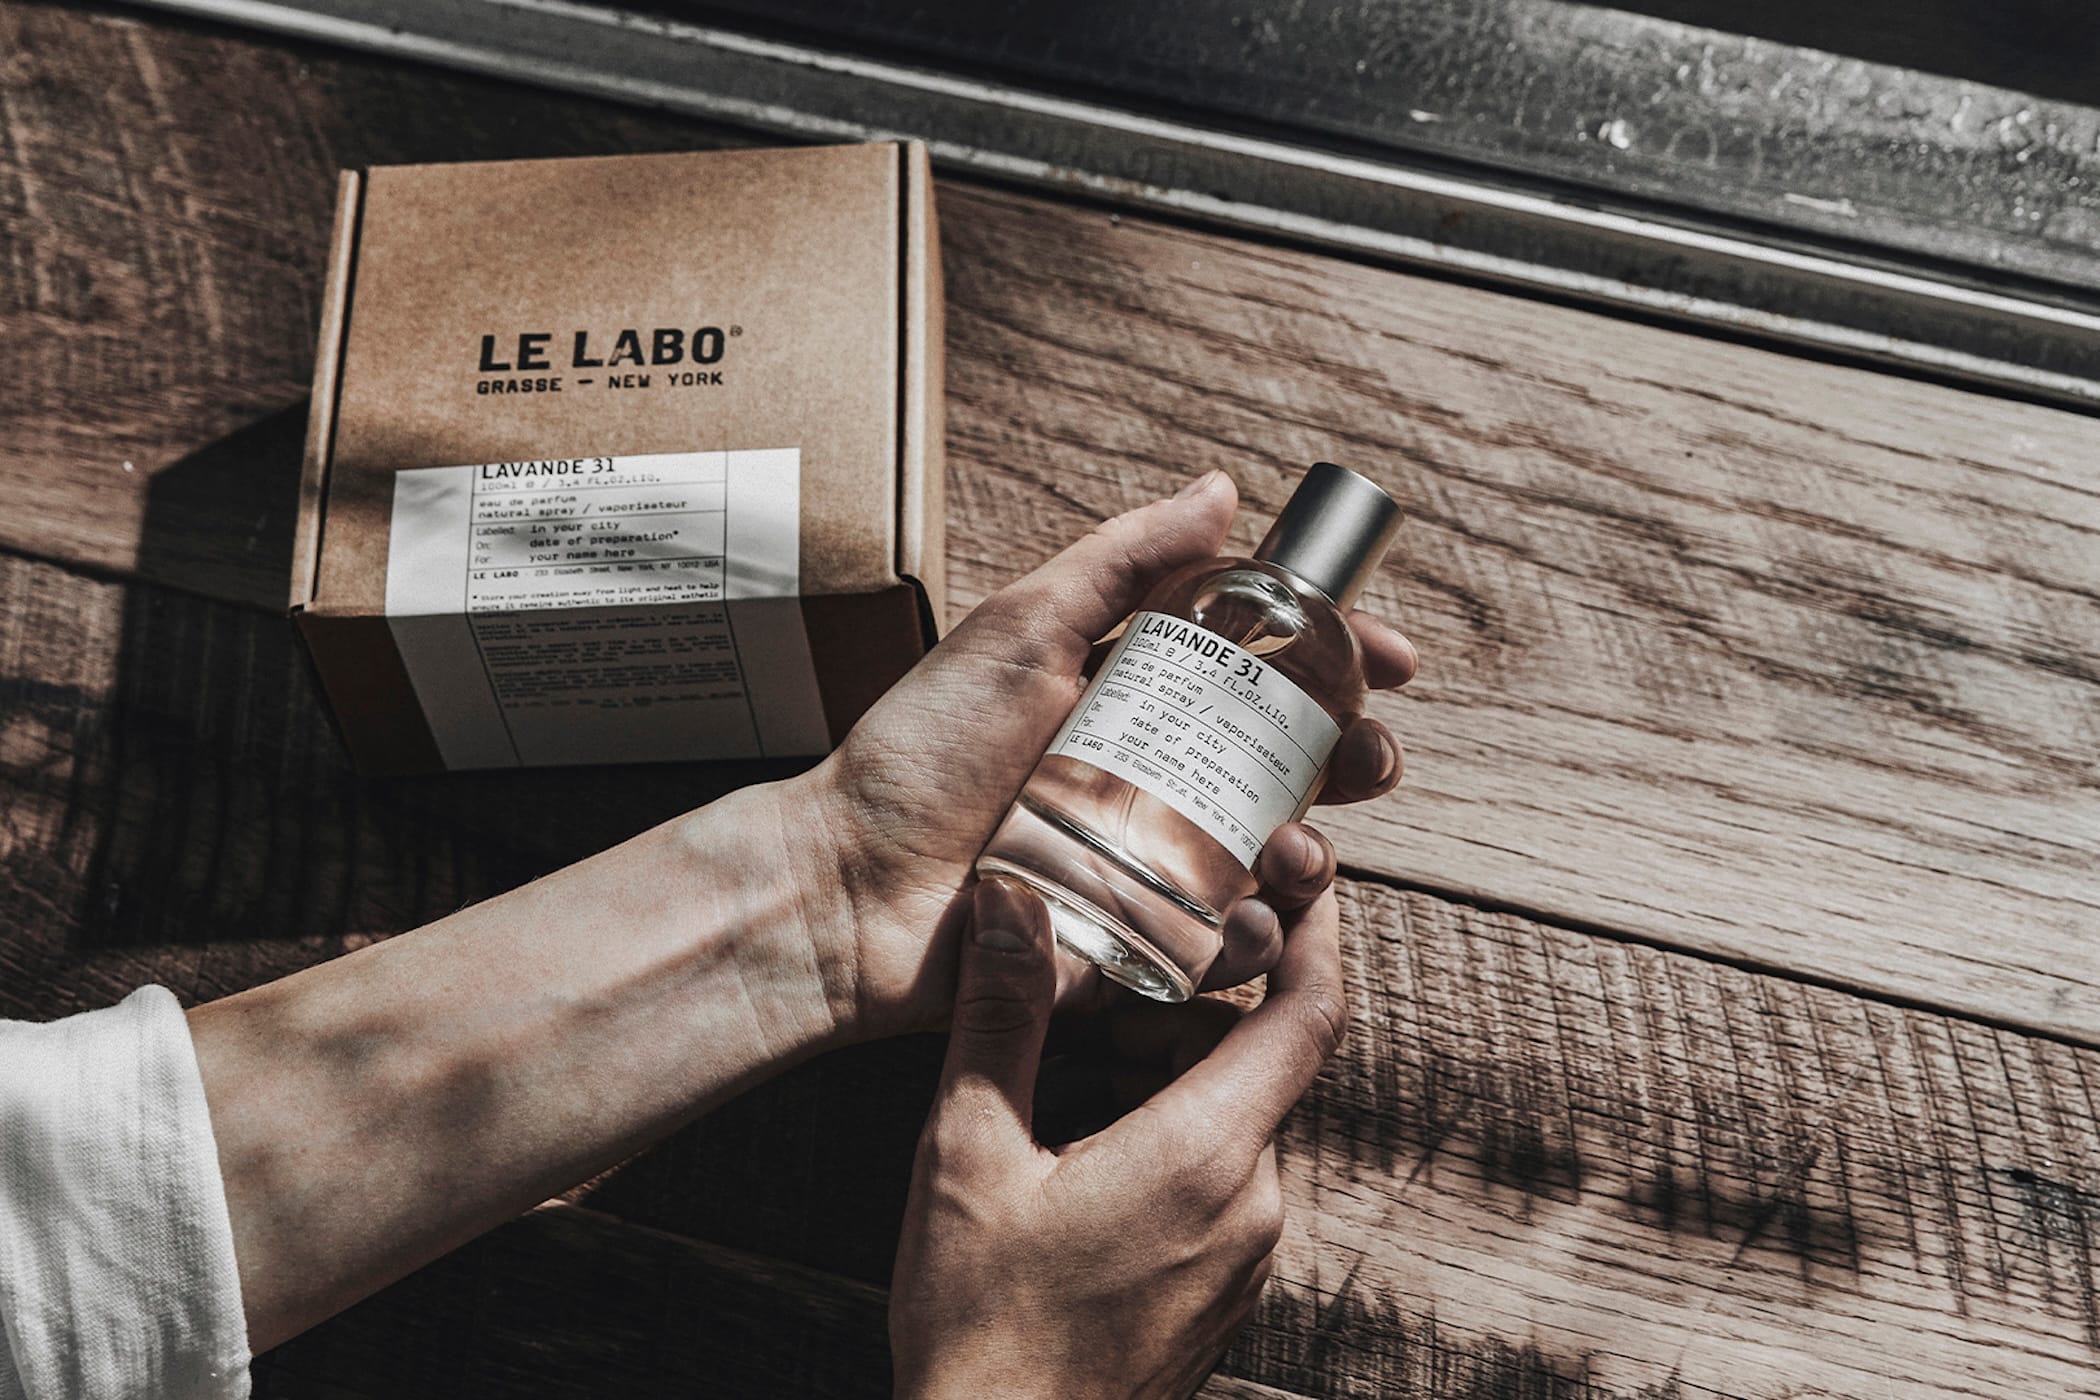 LE LABO 经典香氛系列全新香型LAVANDE 31 | Hypebeast